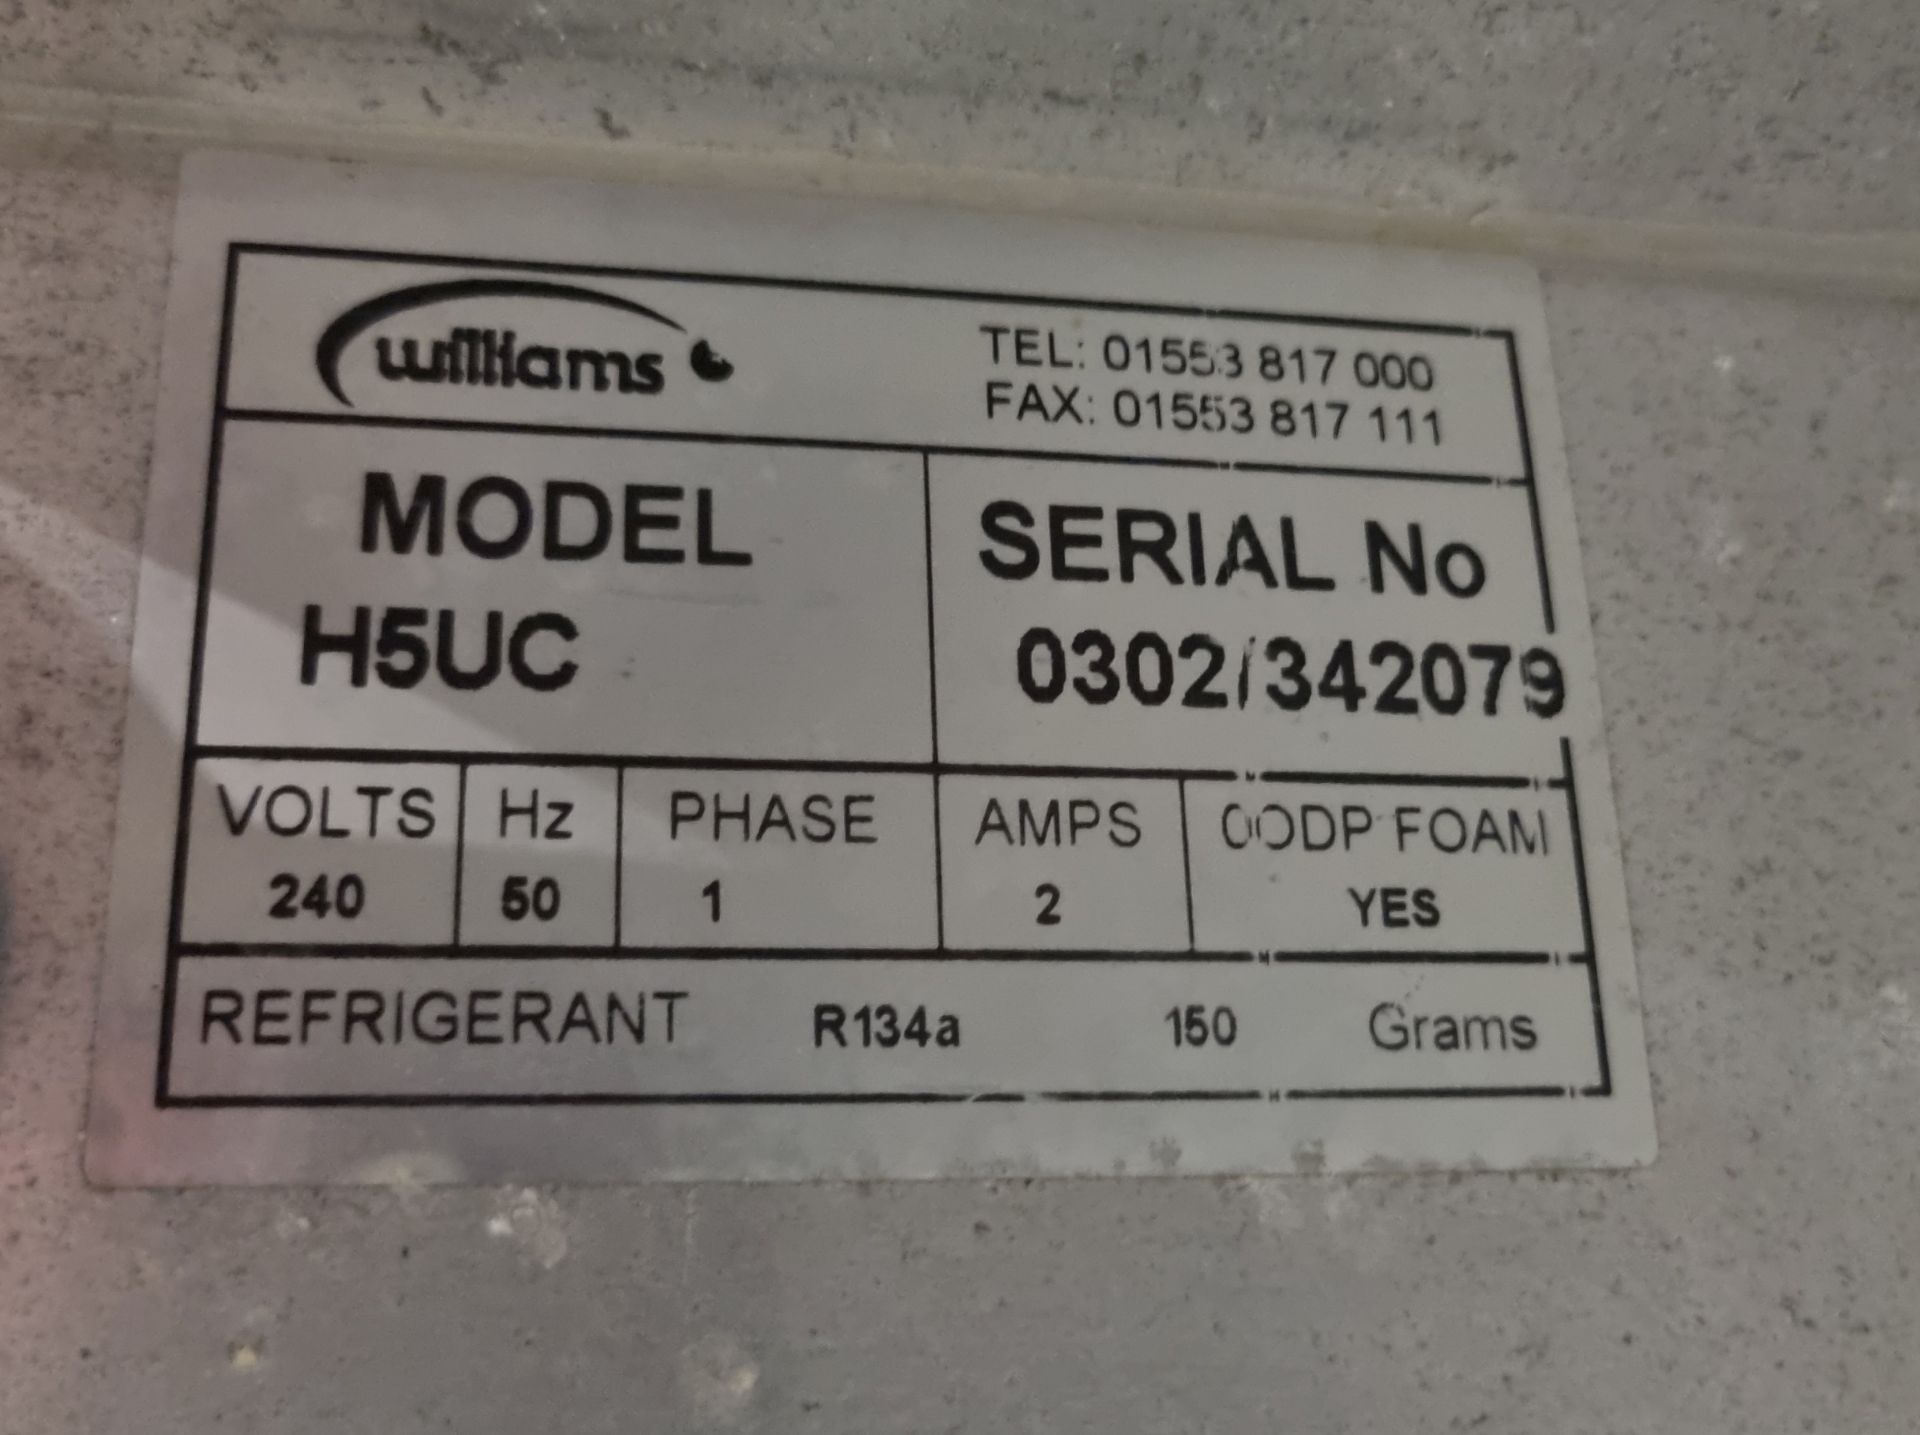 Williams H5UC stainless steel single door under counter fridge - W 650 x D 650 x H 830mm - Image 5 of 5